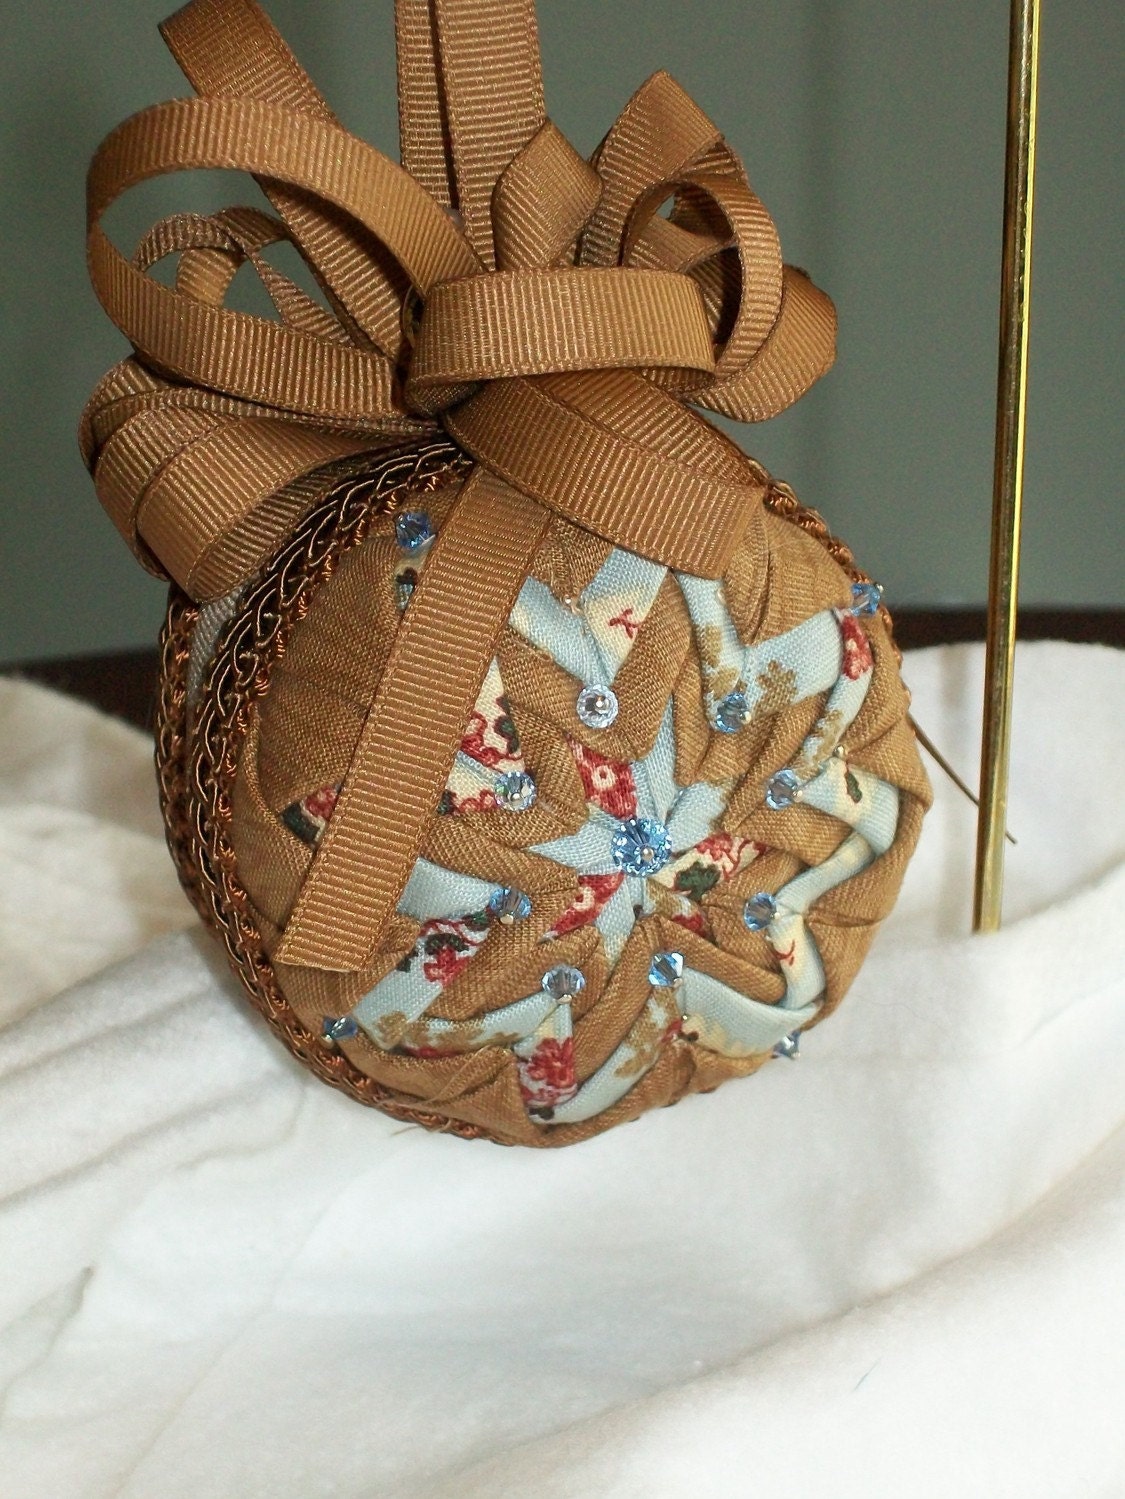 Handmade Christmas Ornaments by JMGillan on Etsy